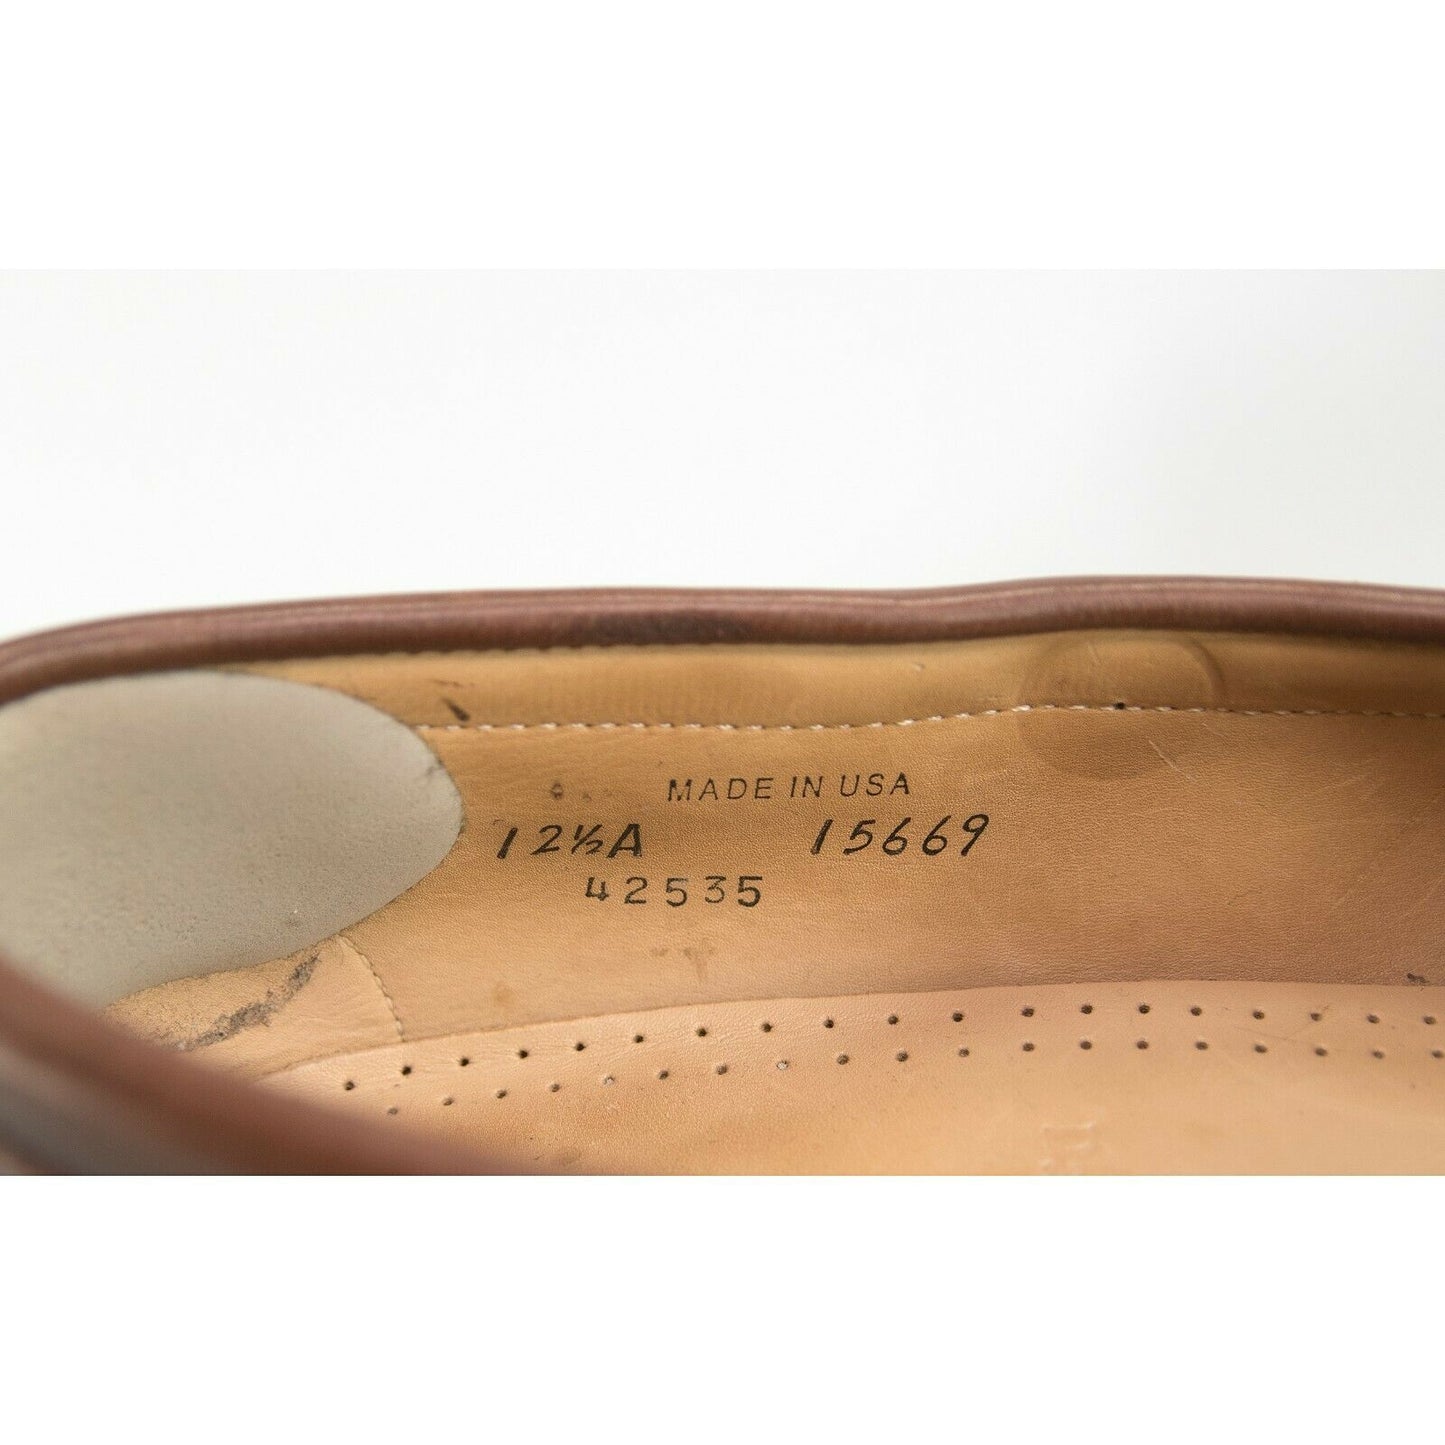 Allen Edmonds Brown Leather Danbury Penny Loafer Oxford Size 12.5